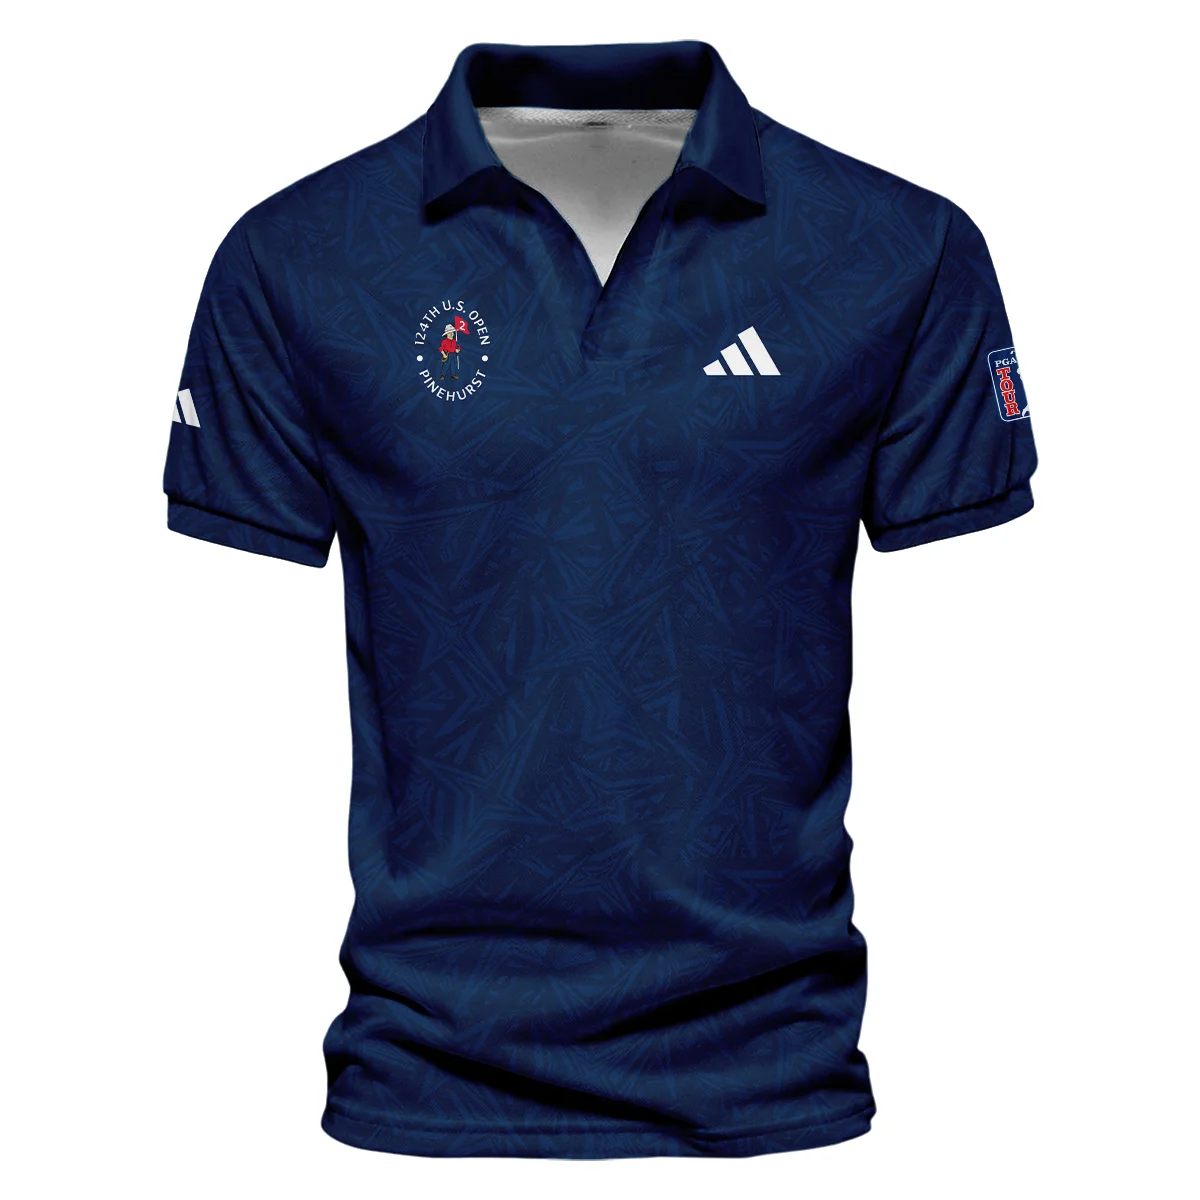 Adidas 124th U.S. Open Pinehurst Stars Gradient Pattern Dark Blue Sleeveless Jacket Style Classic Sleeveless Jacket